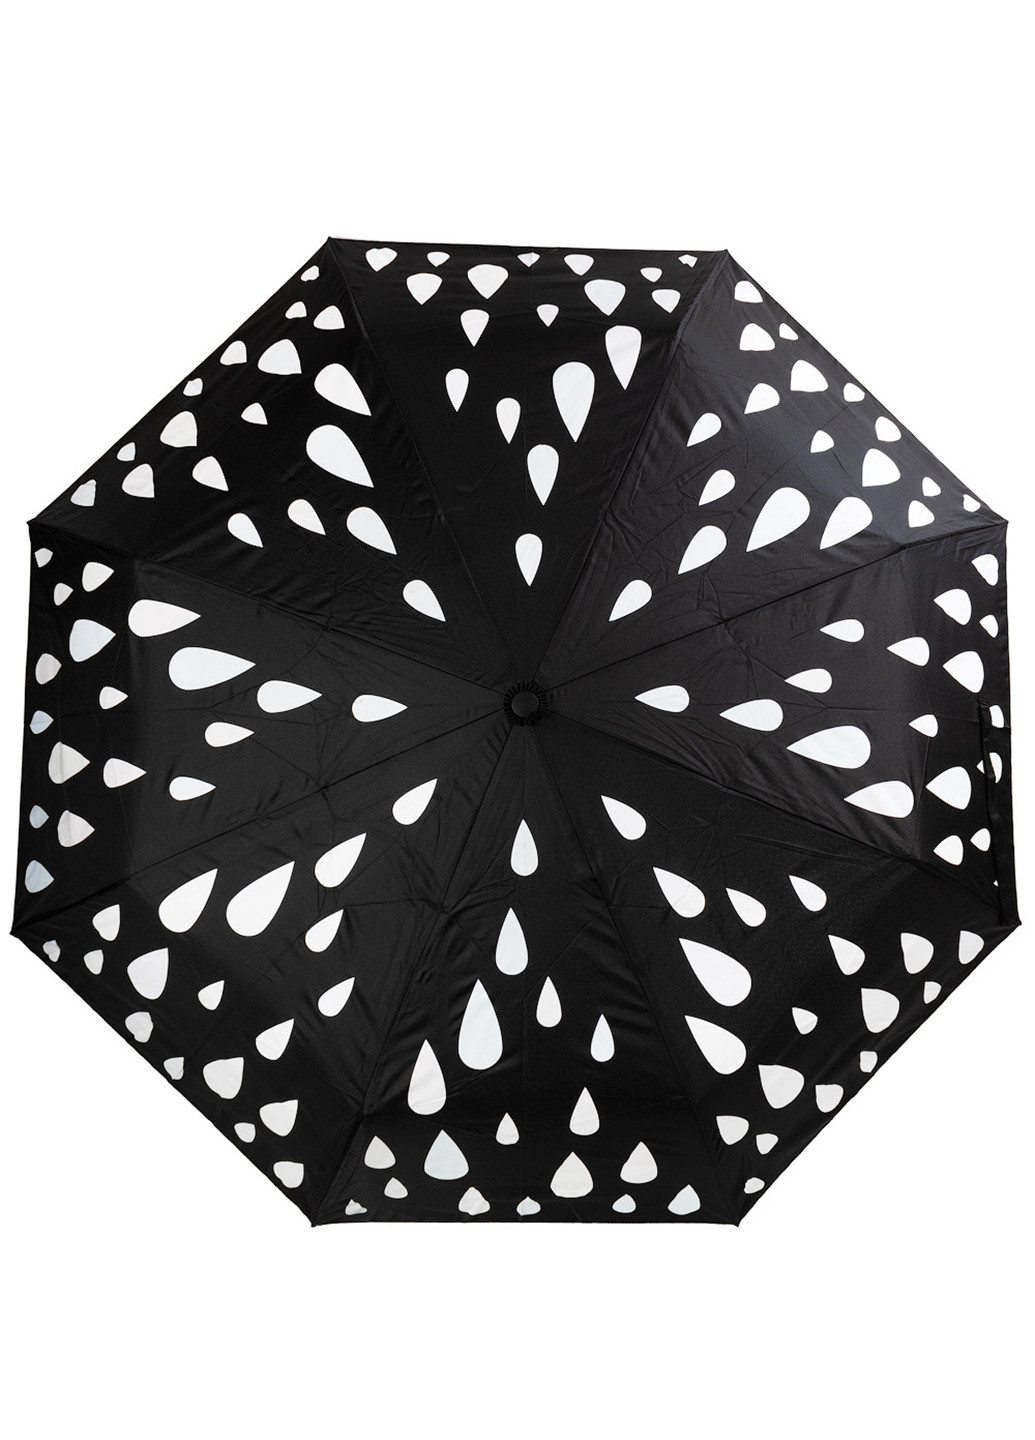 Жіночий складаний парасолька повний автомат 98 см Magic Rain (232988915)